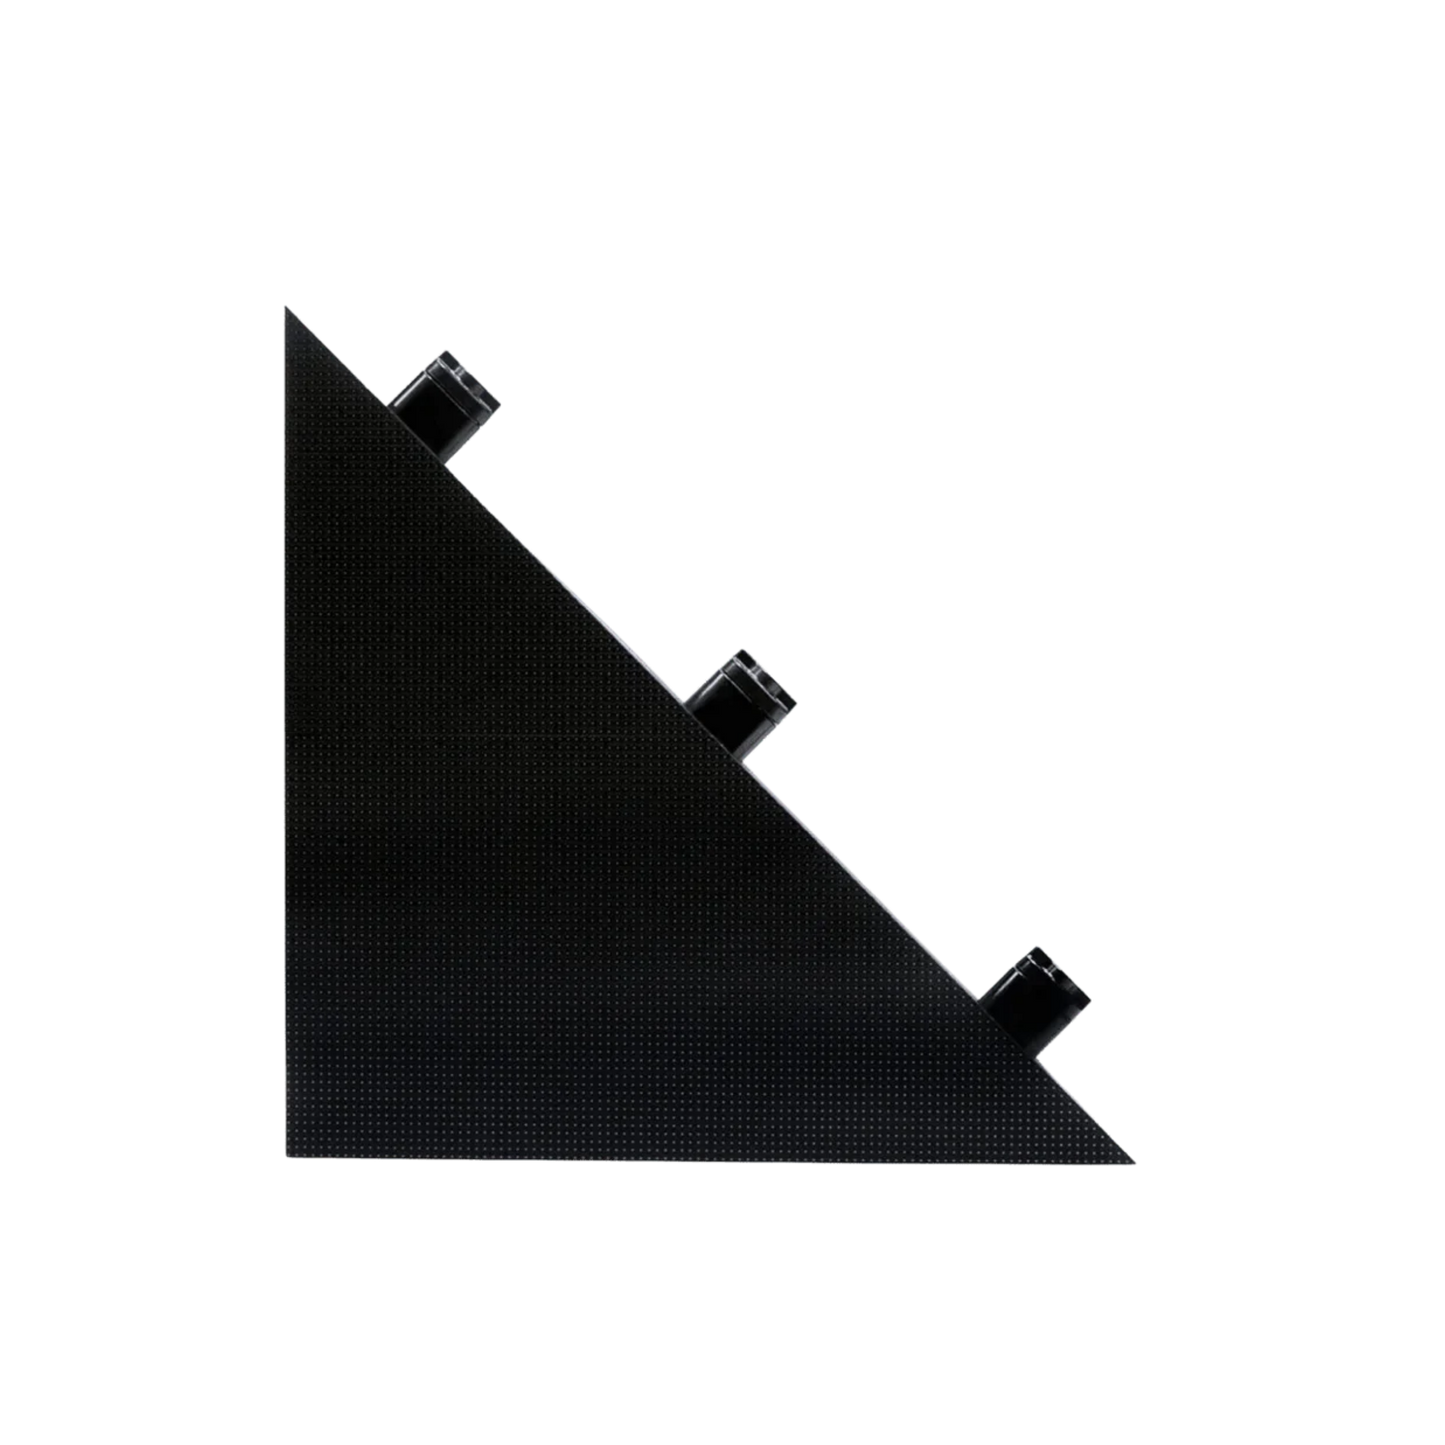 2.8 mm indoor- triangular panel (MG12)